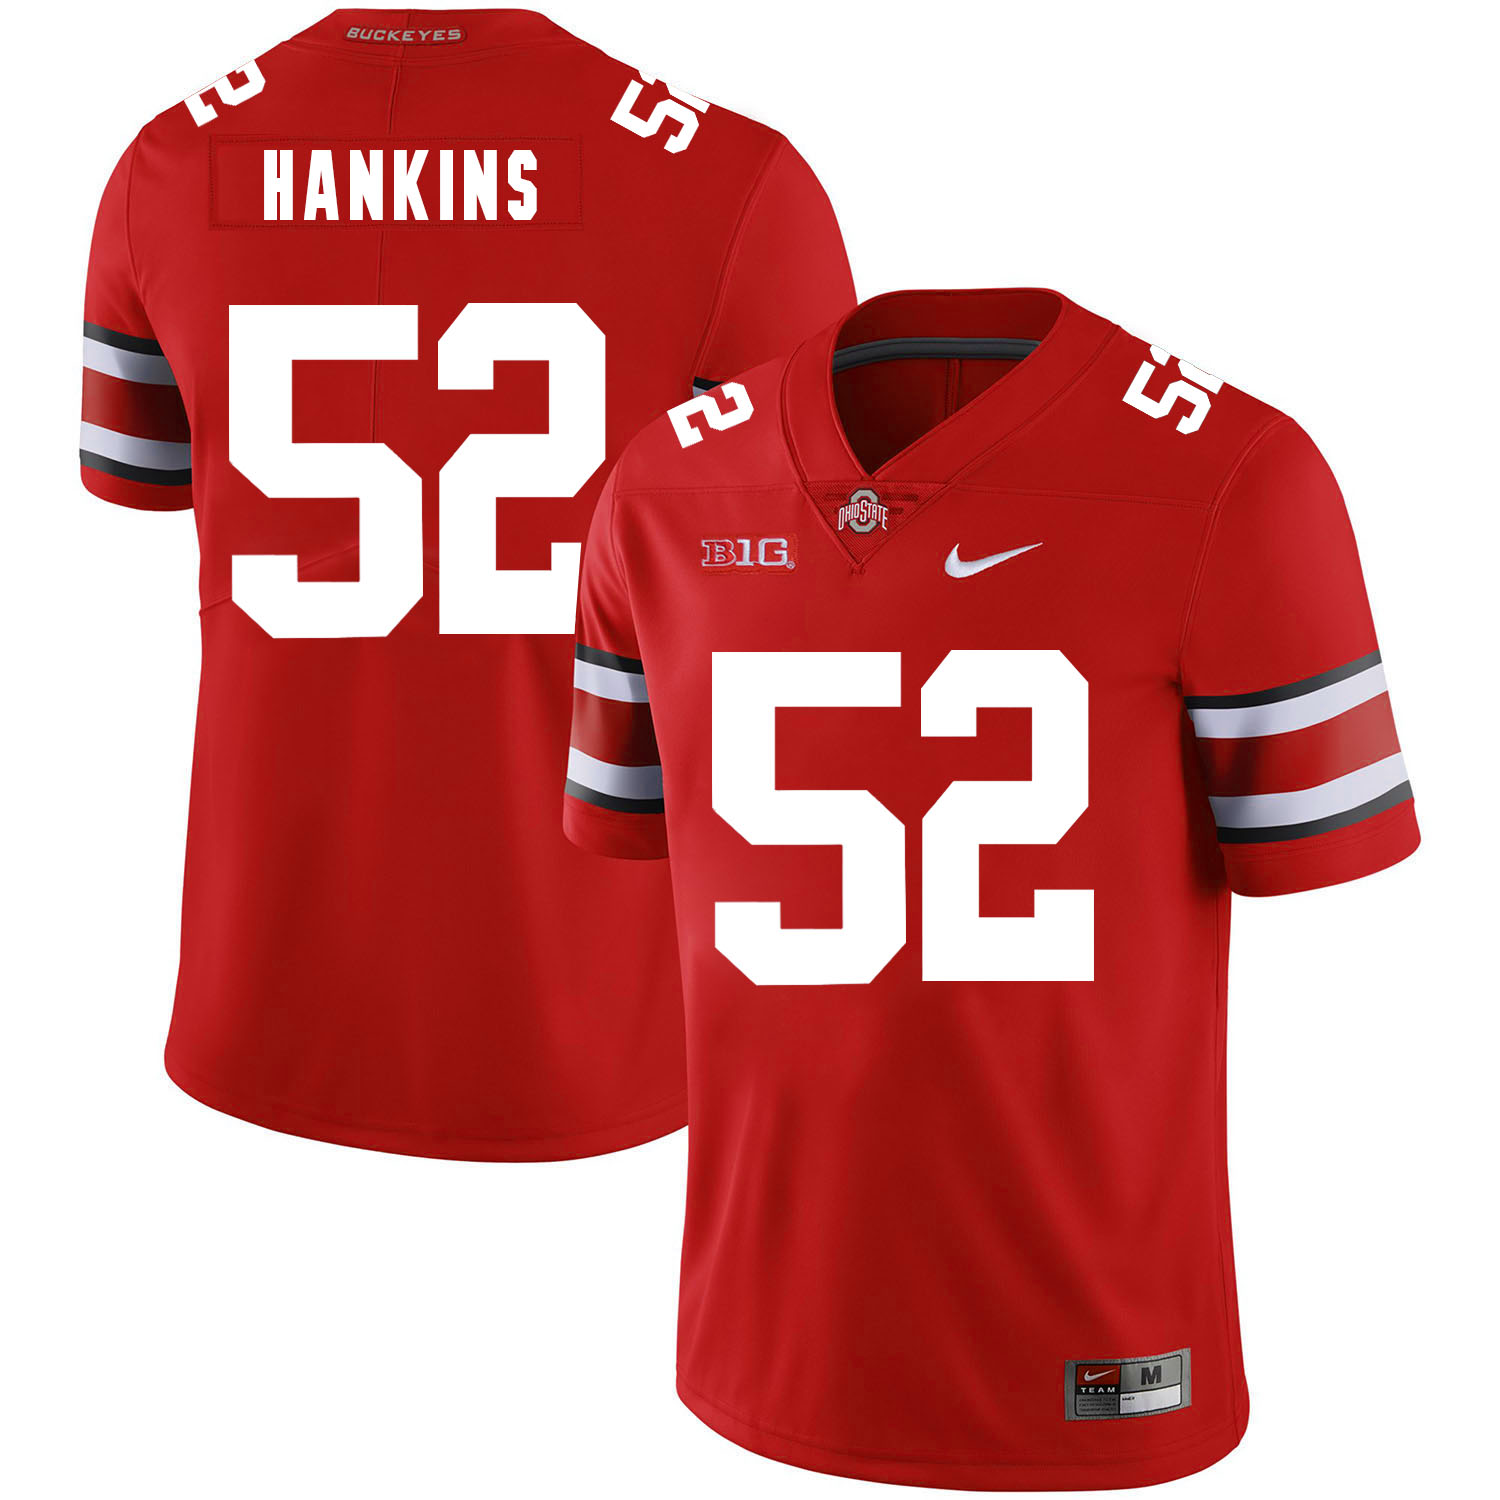 Ohio State Buckeyes 52 Johnathan Hankins Red Nike College Football Jersey